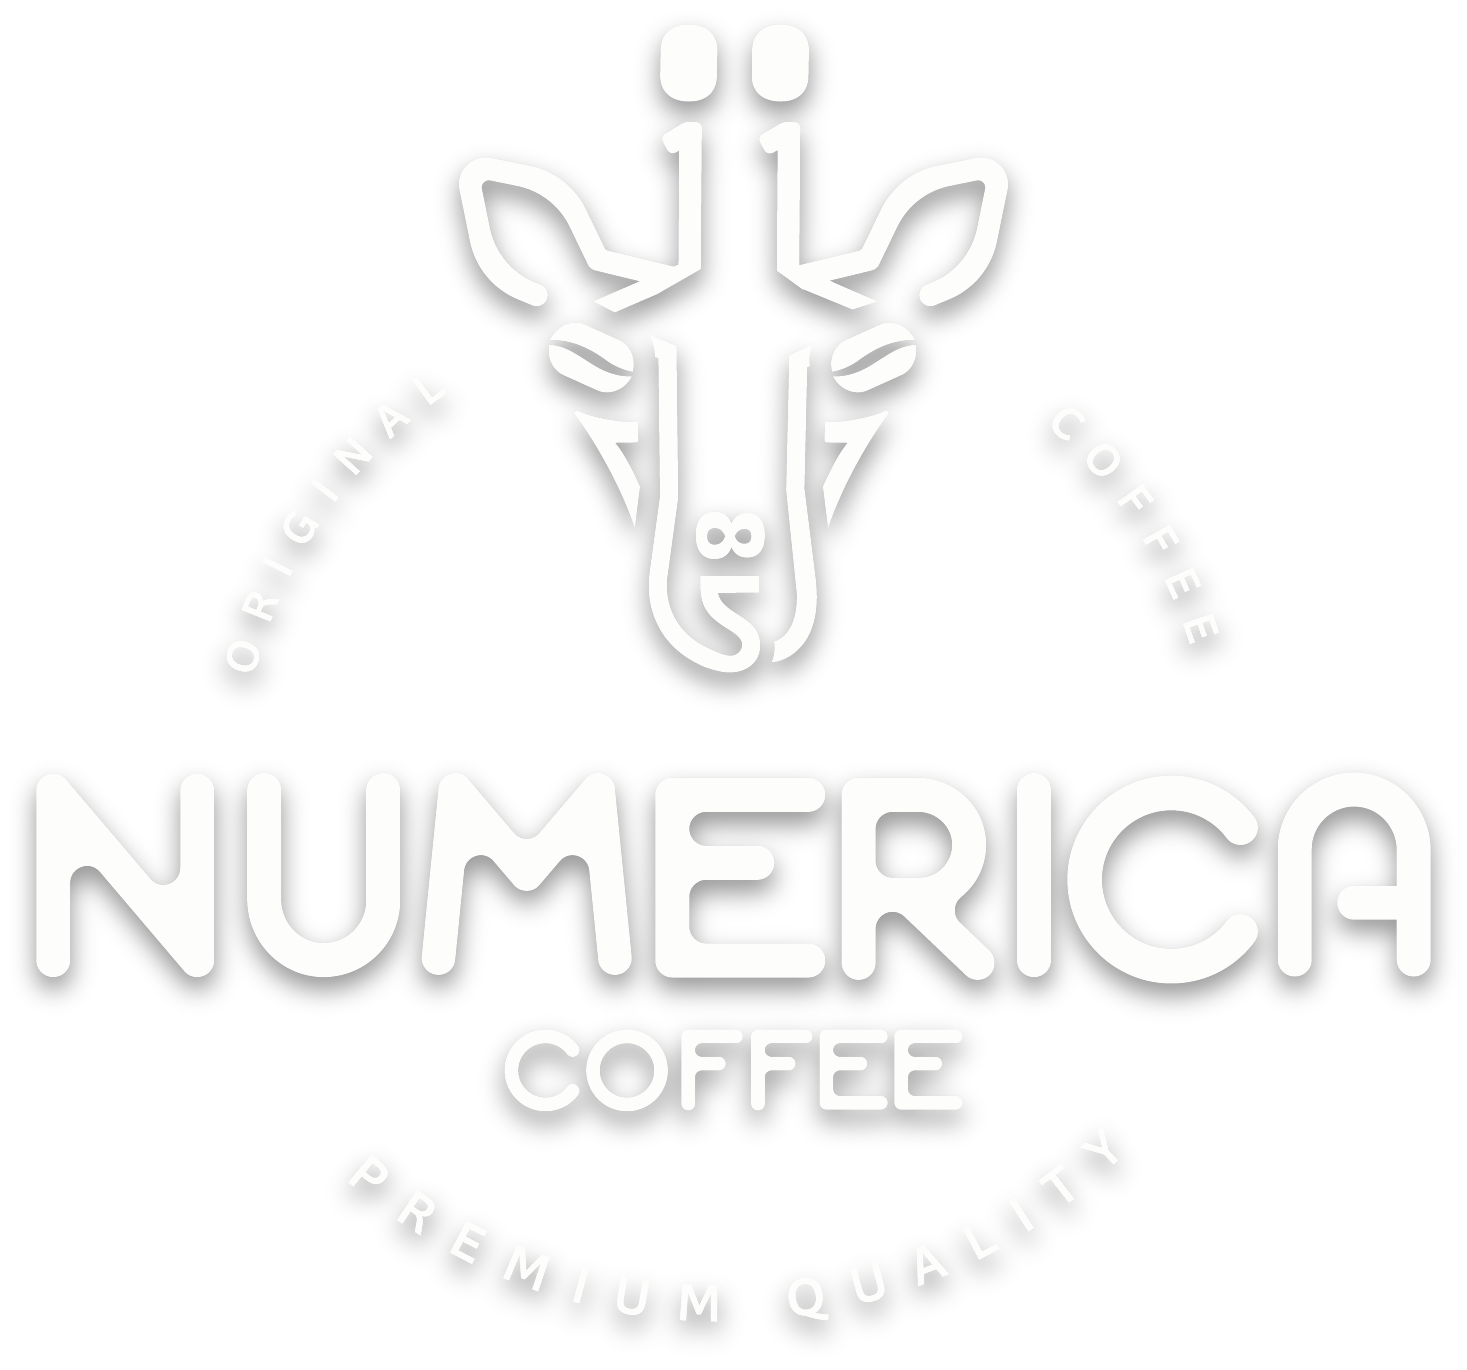 Numerica-Coffee